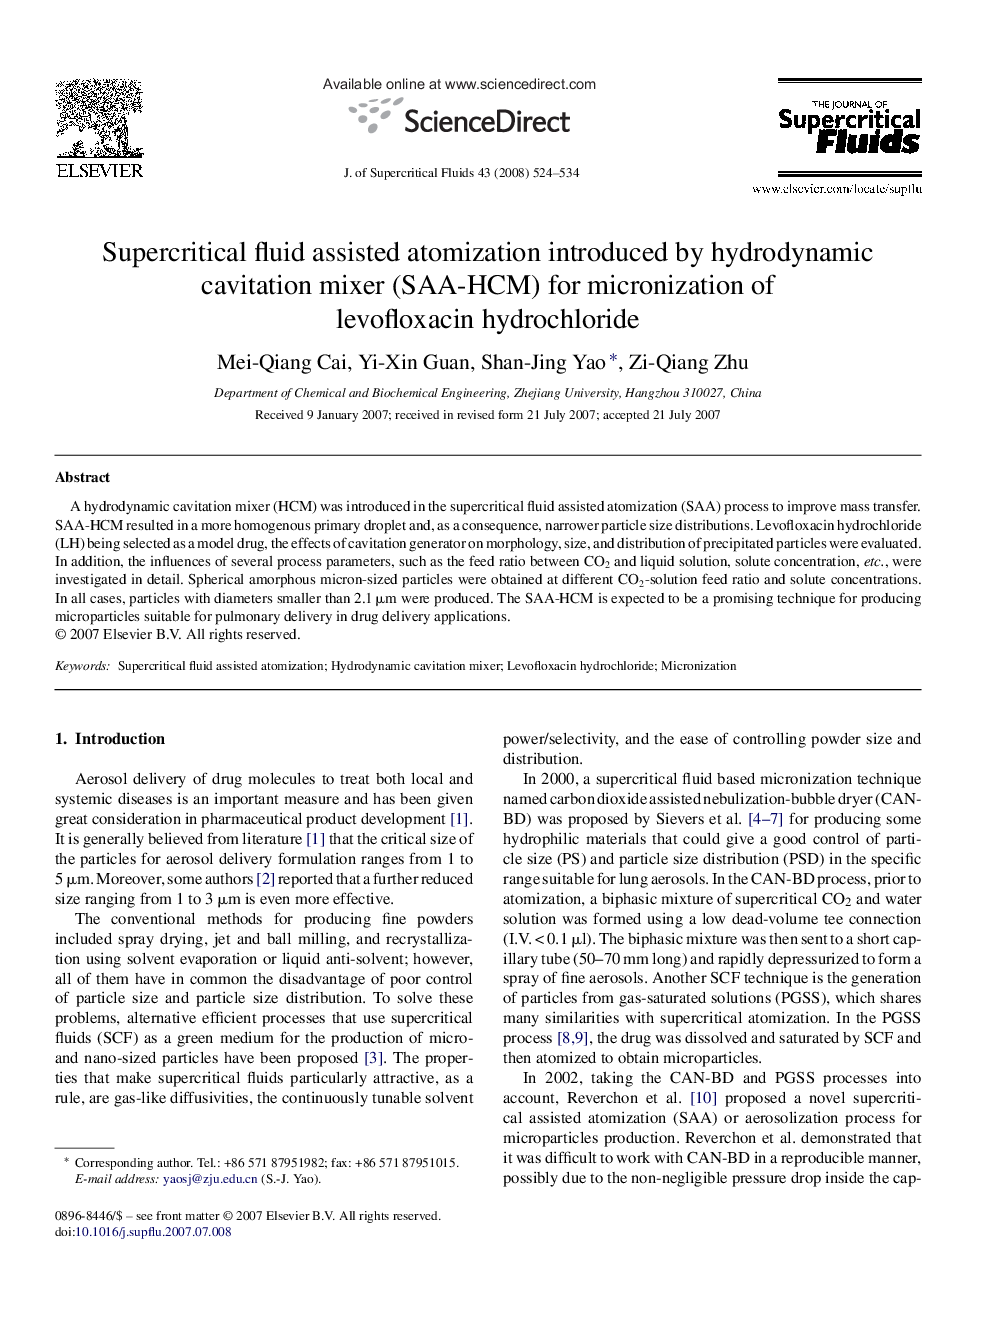 Supercritical fluid assisted atomization introduced by hydrodynamic cavitation mixer (SAA-HCM) for micronization of levofloxacin hydrochloride